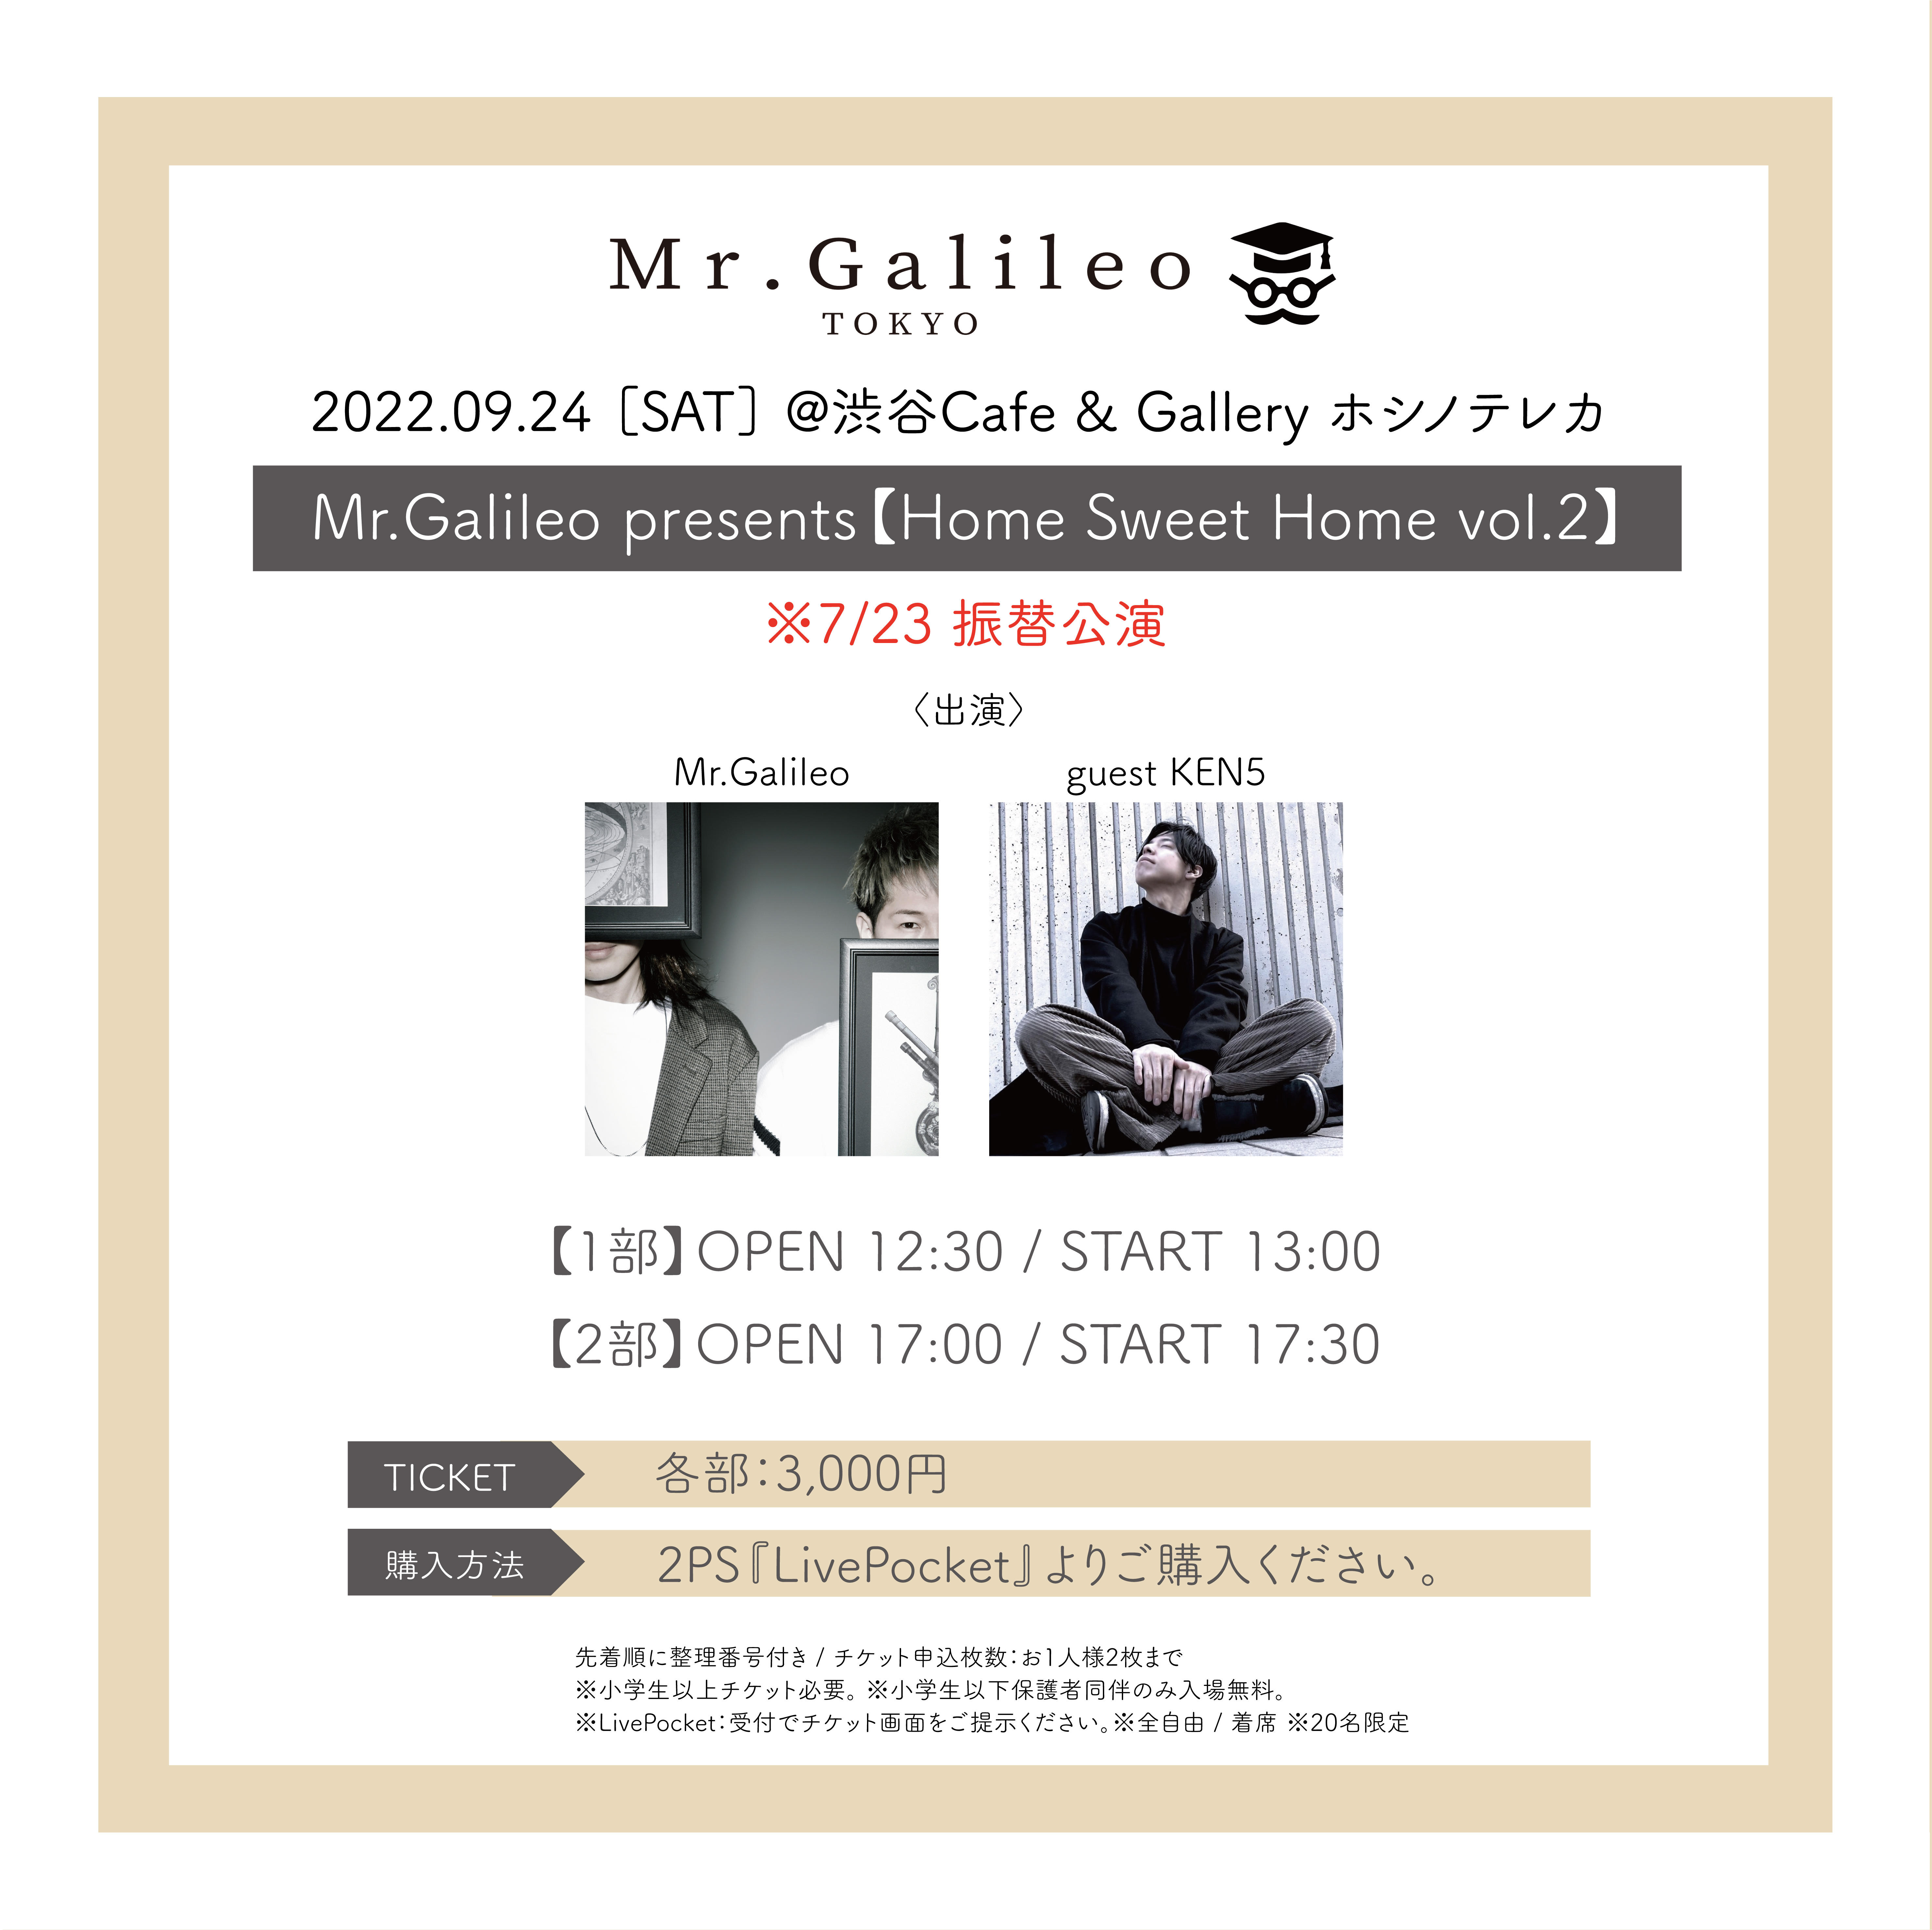 【9/24(sat) 2部】Mr.Galileo presents 【Home Sweet Home vol.2】